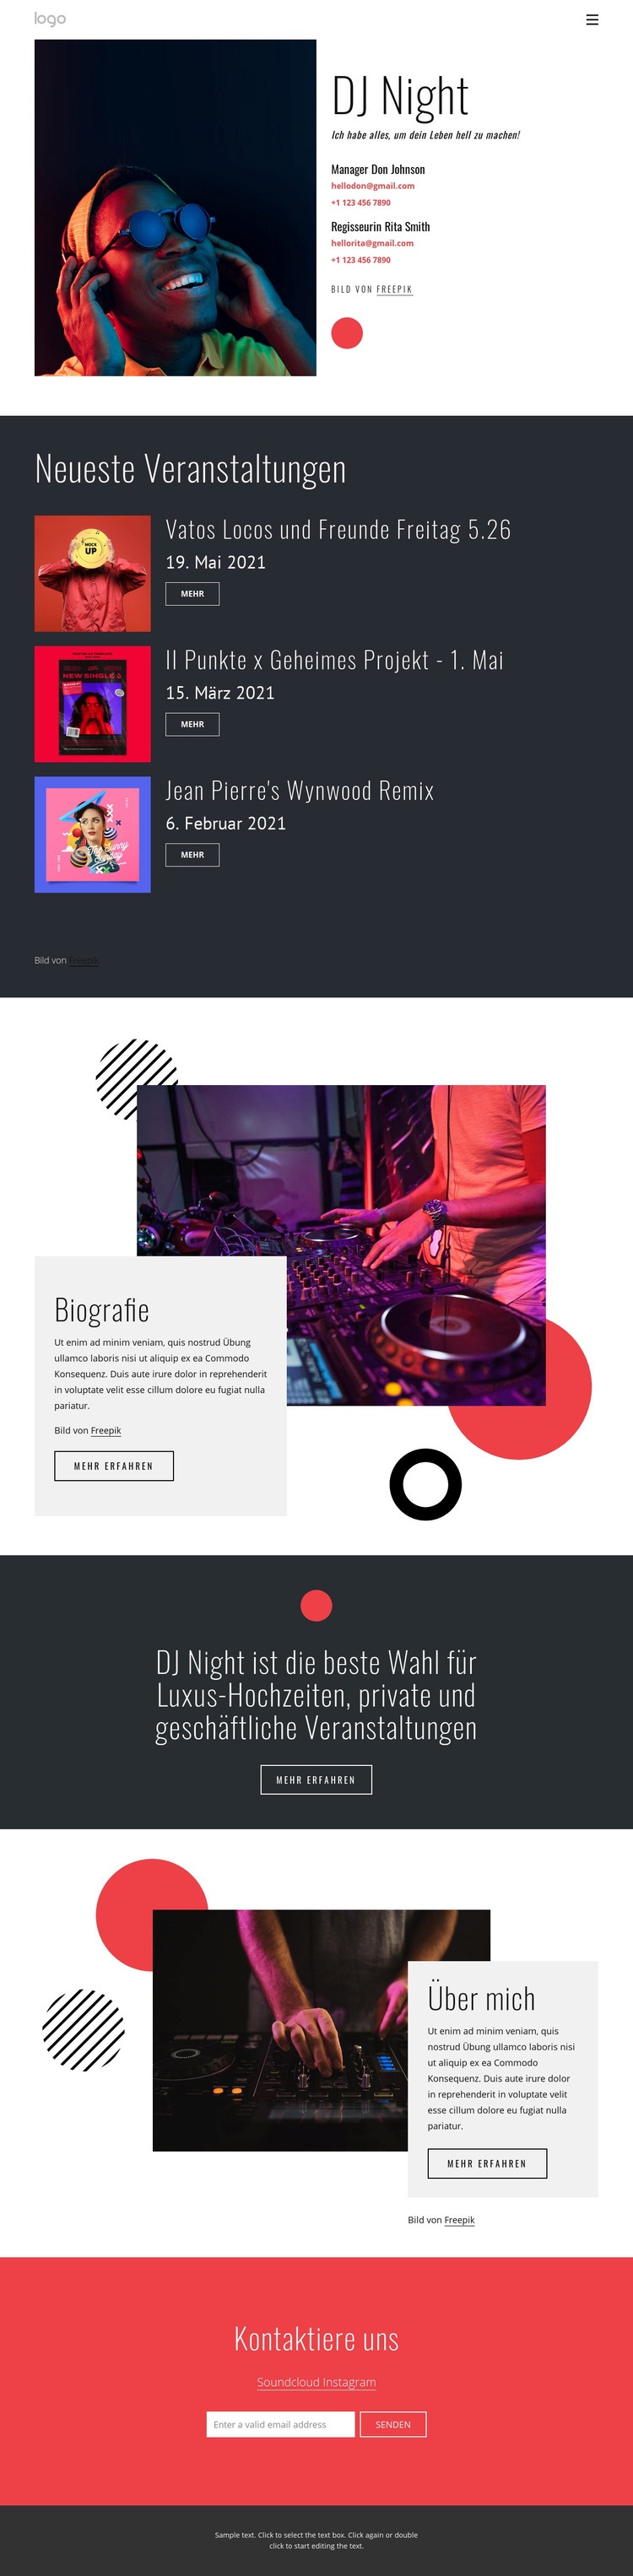 DJ Nacht Website Website design